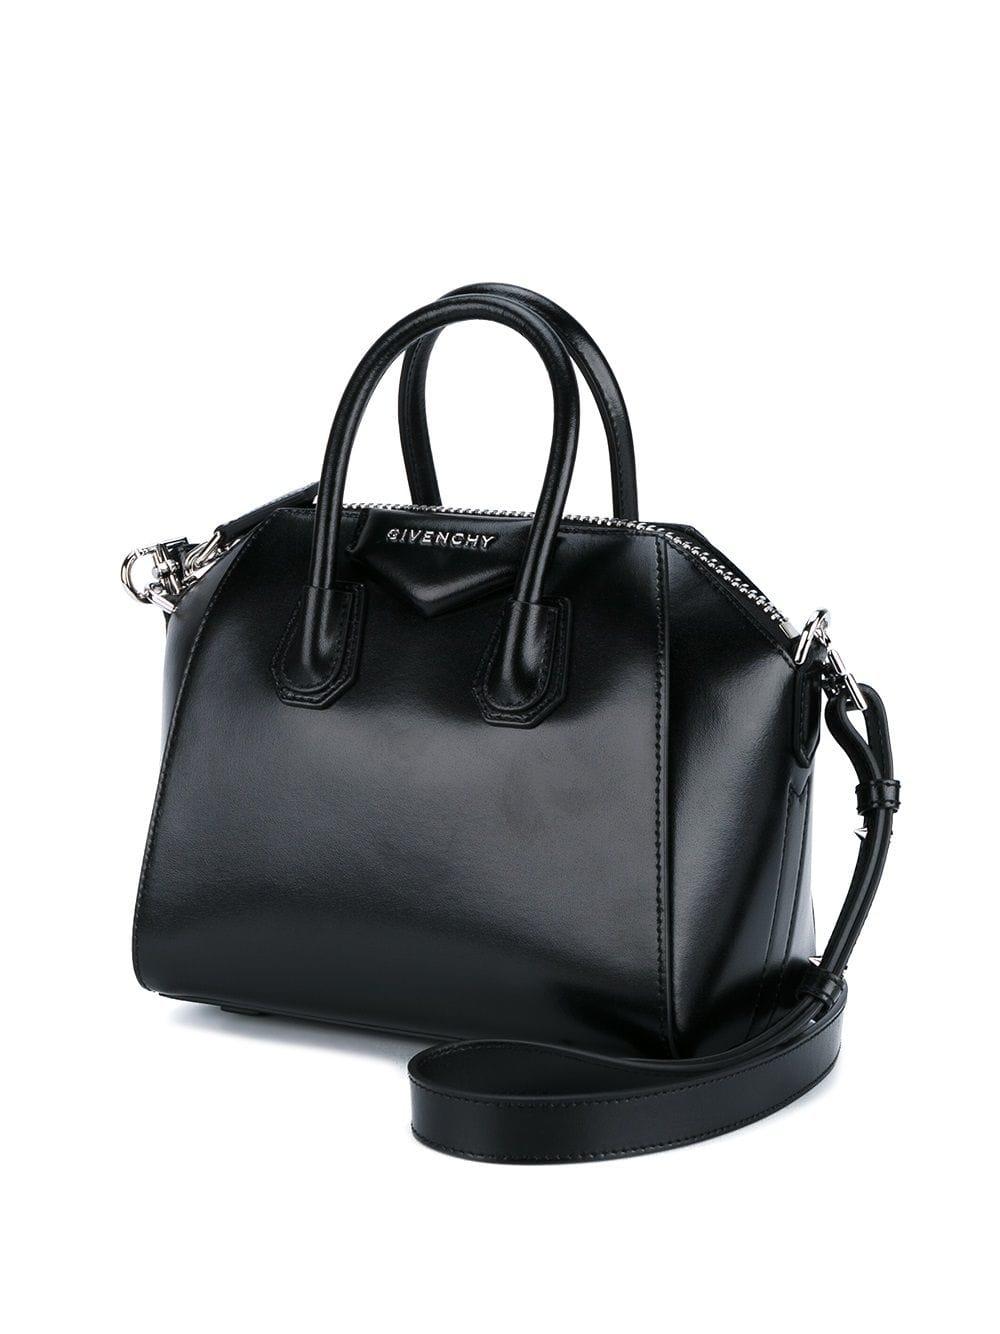 Lyst - Givenchy Antigona Small Leather Bag in Black